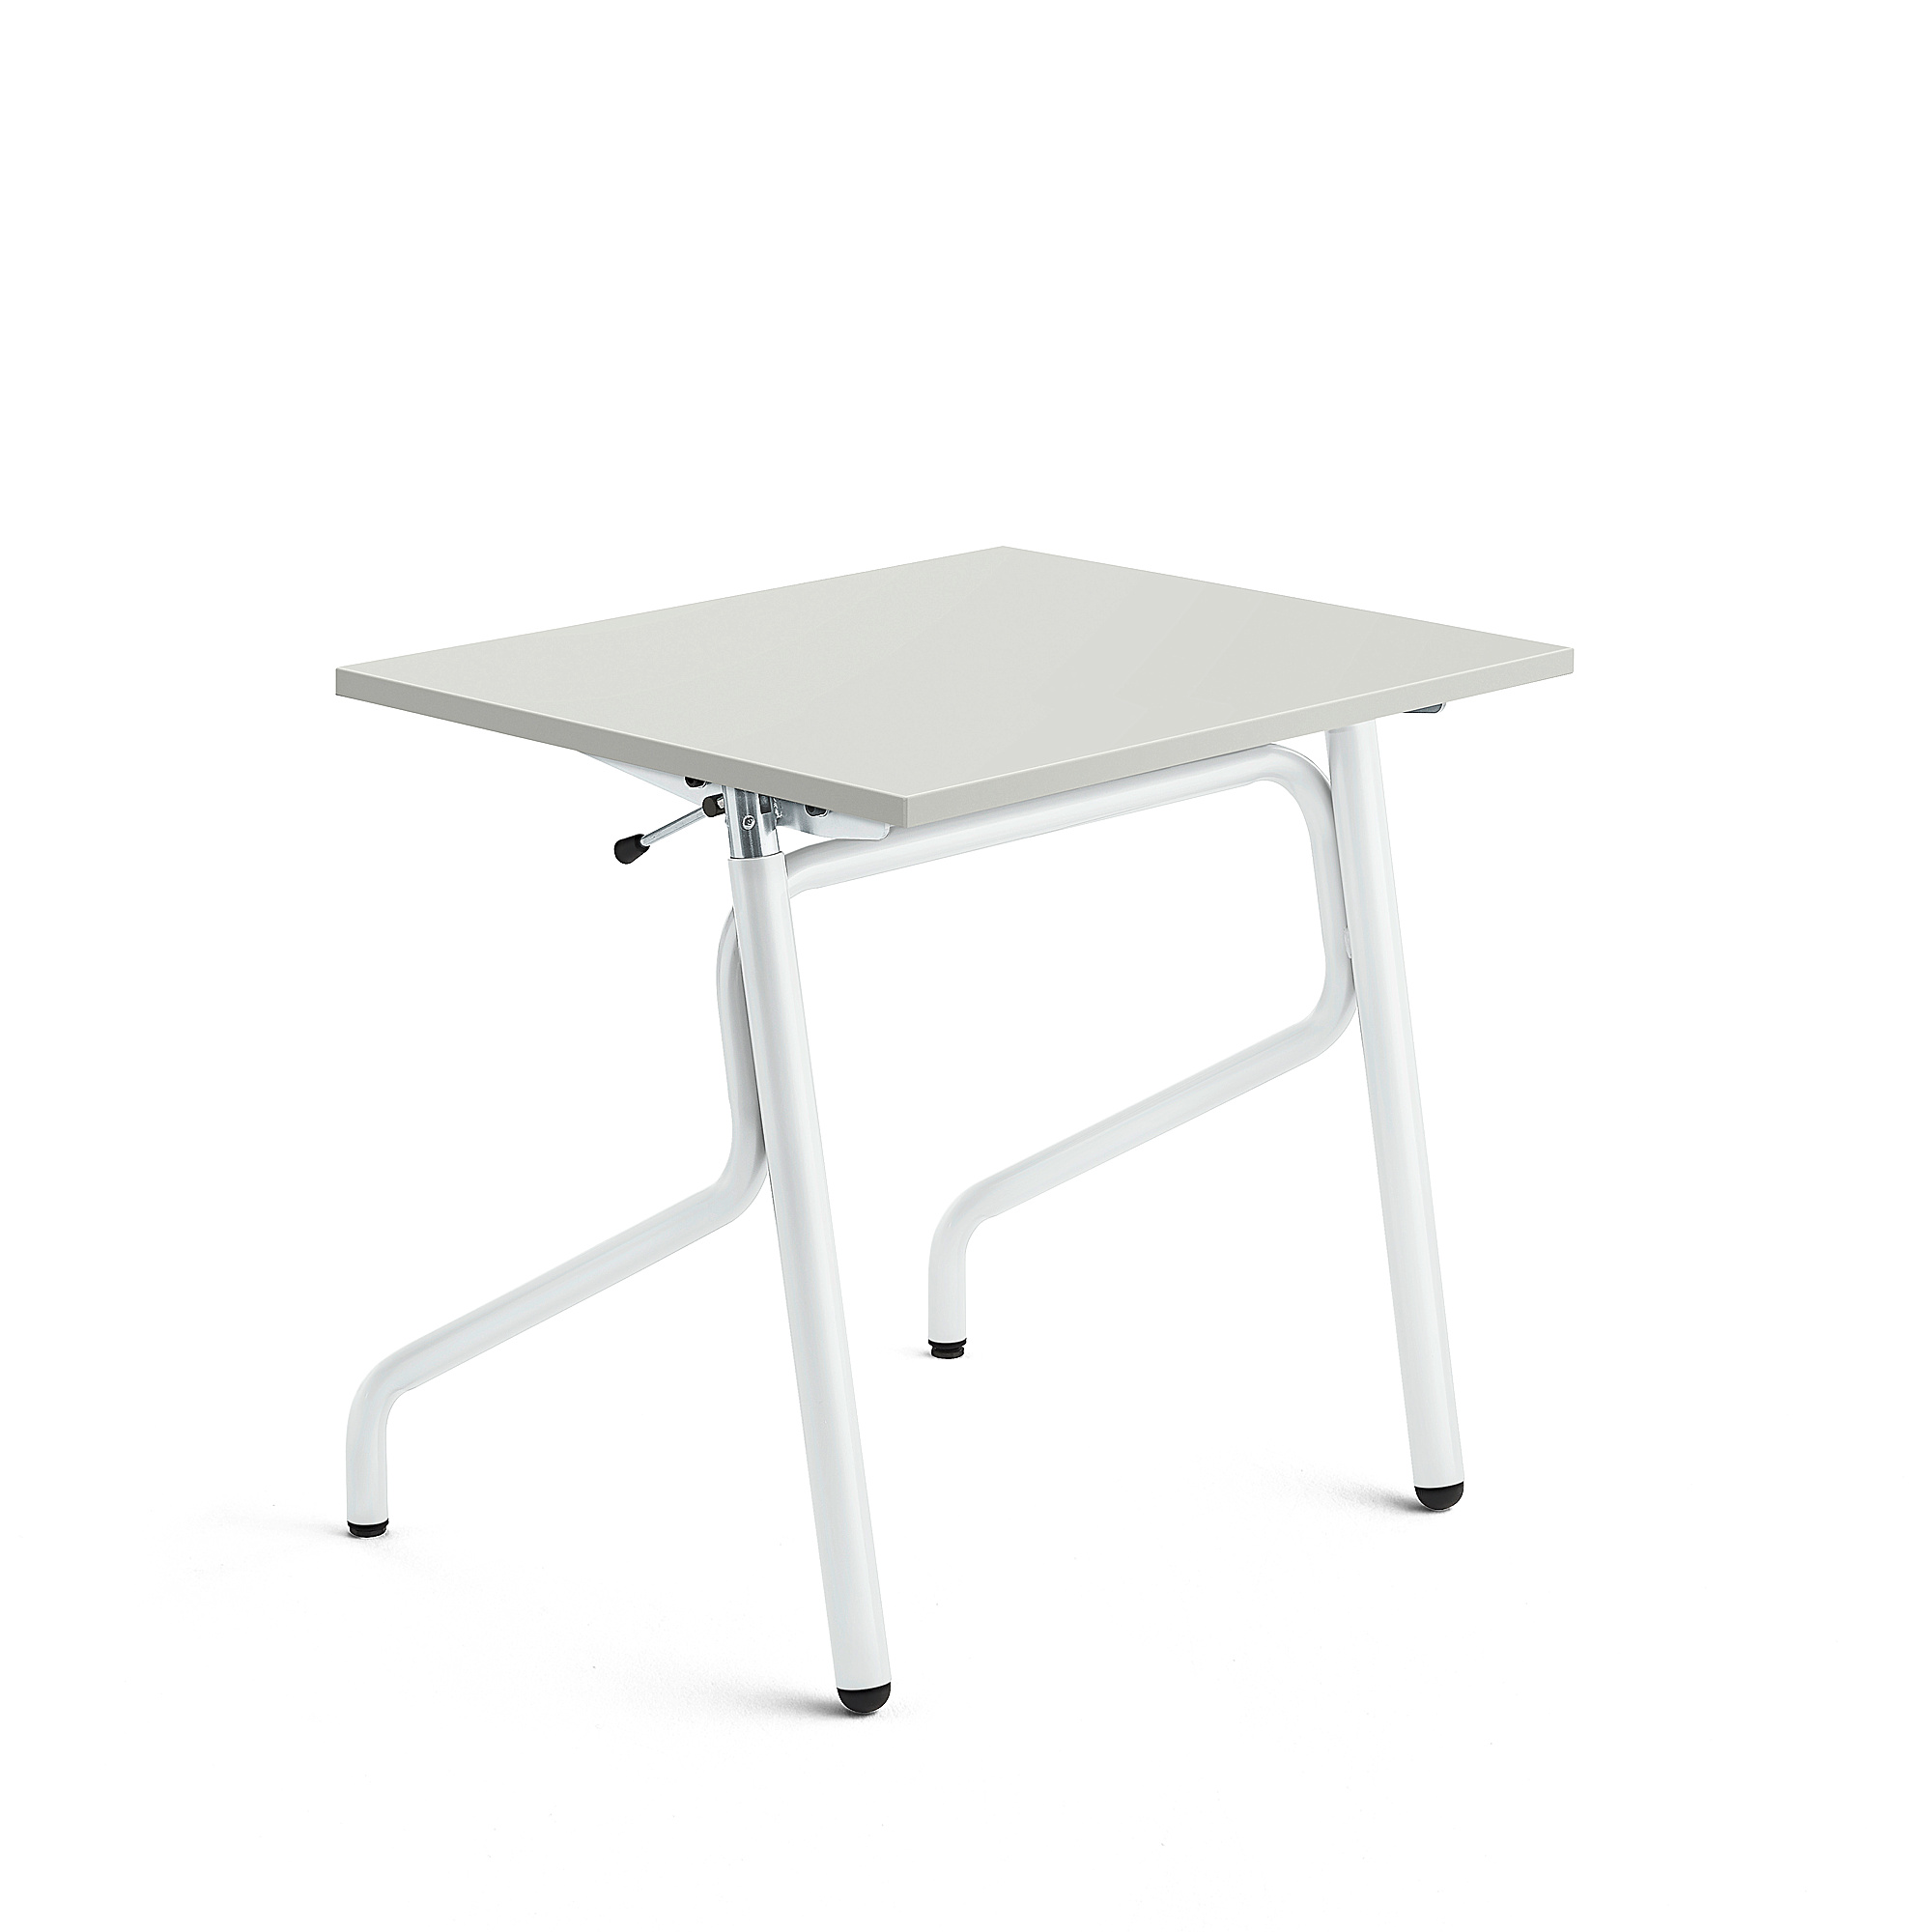 E-shop Nastaviteľná školská lavica ADJUST, 700x600 mm, HPL - šedá, biela